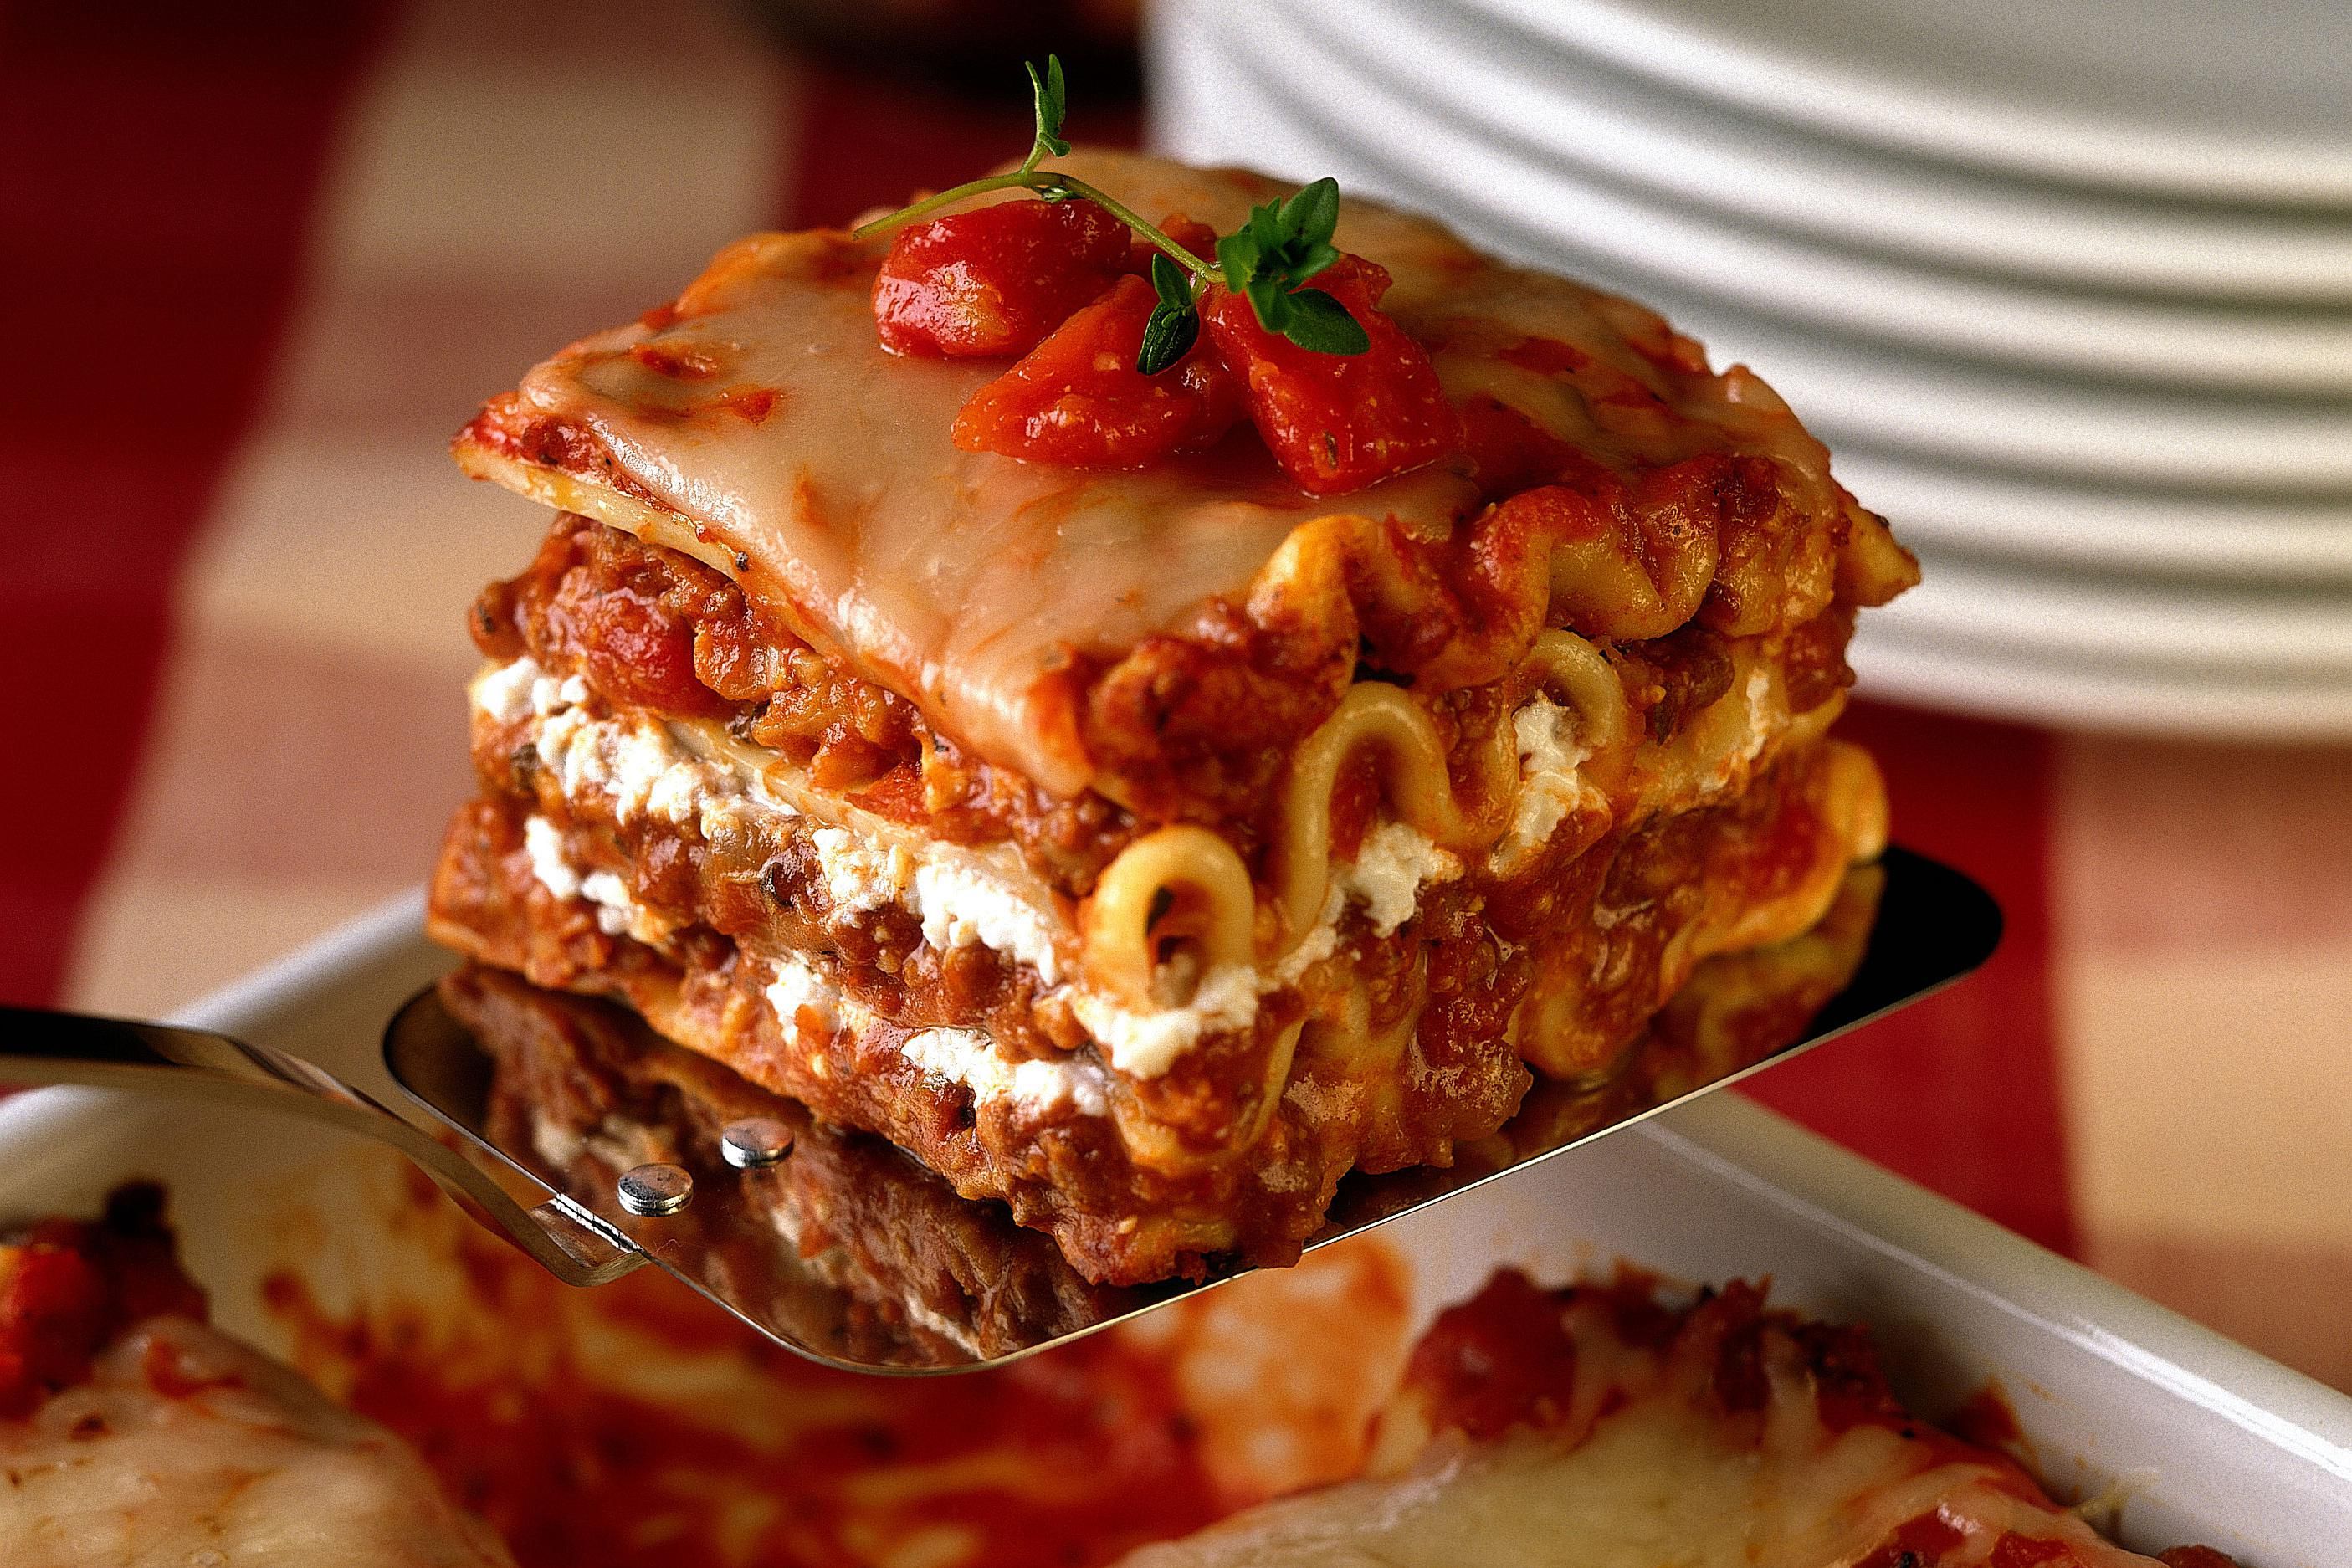 Basic Lasagna With Meaty Sauce Recipe